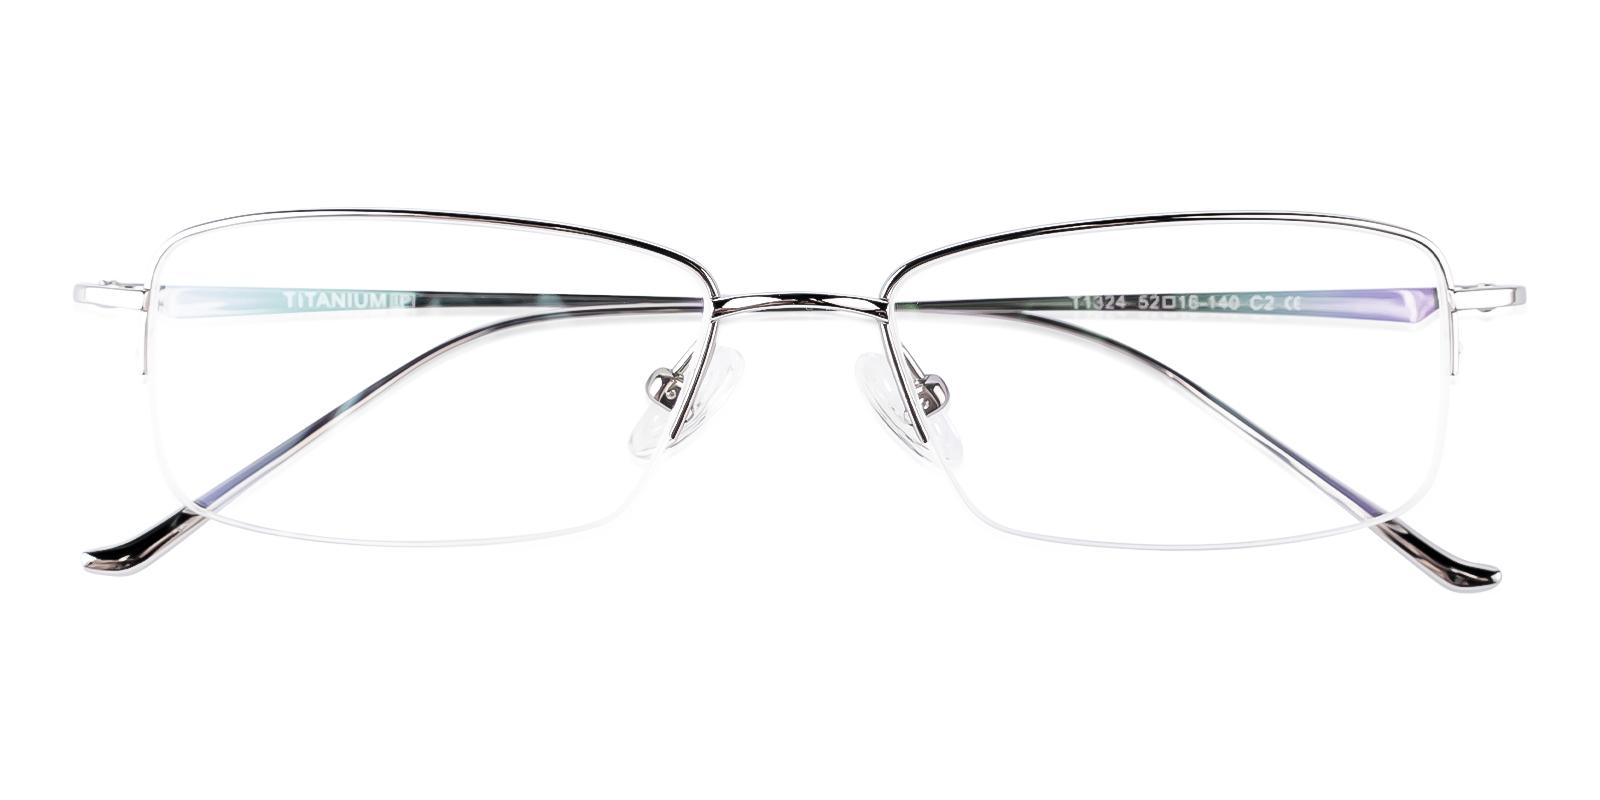 Yesior Silver Titanium Eyeglasses , NosePads Frames from ABBE Glasses